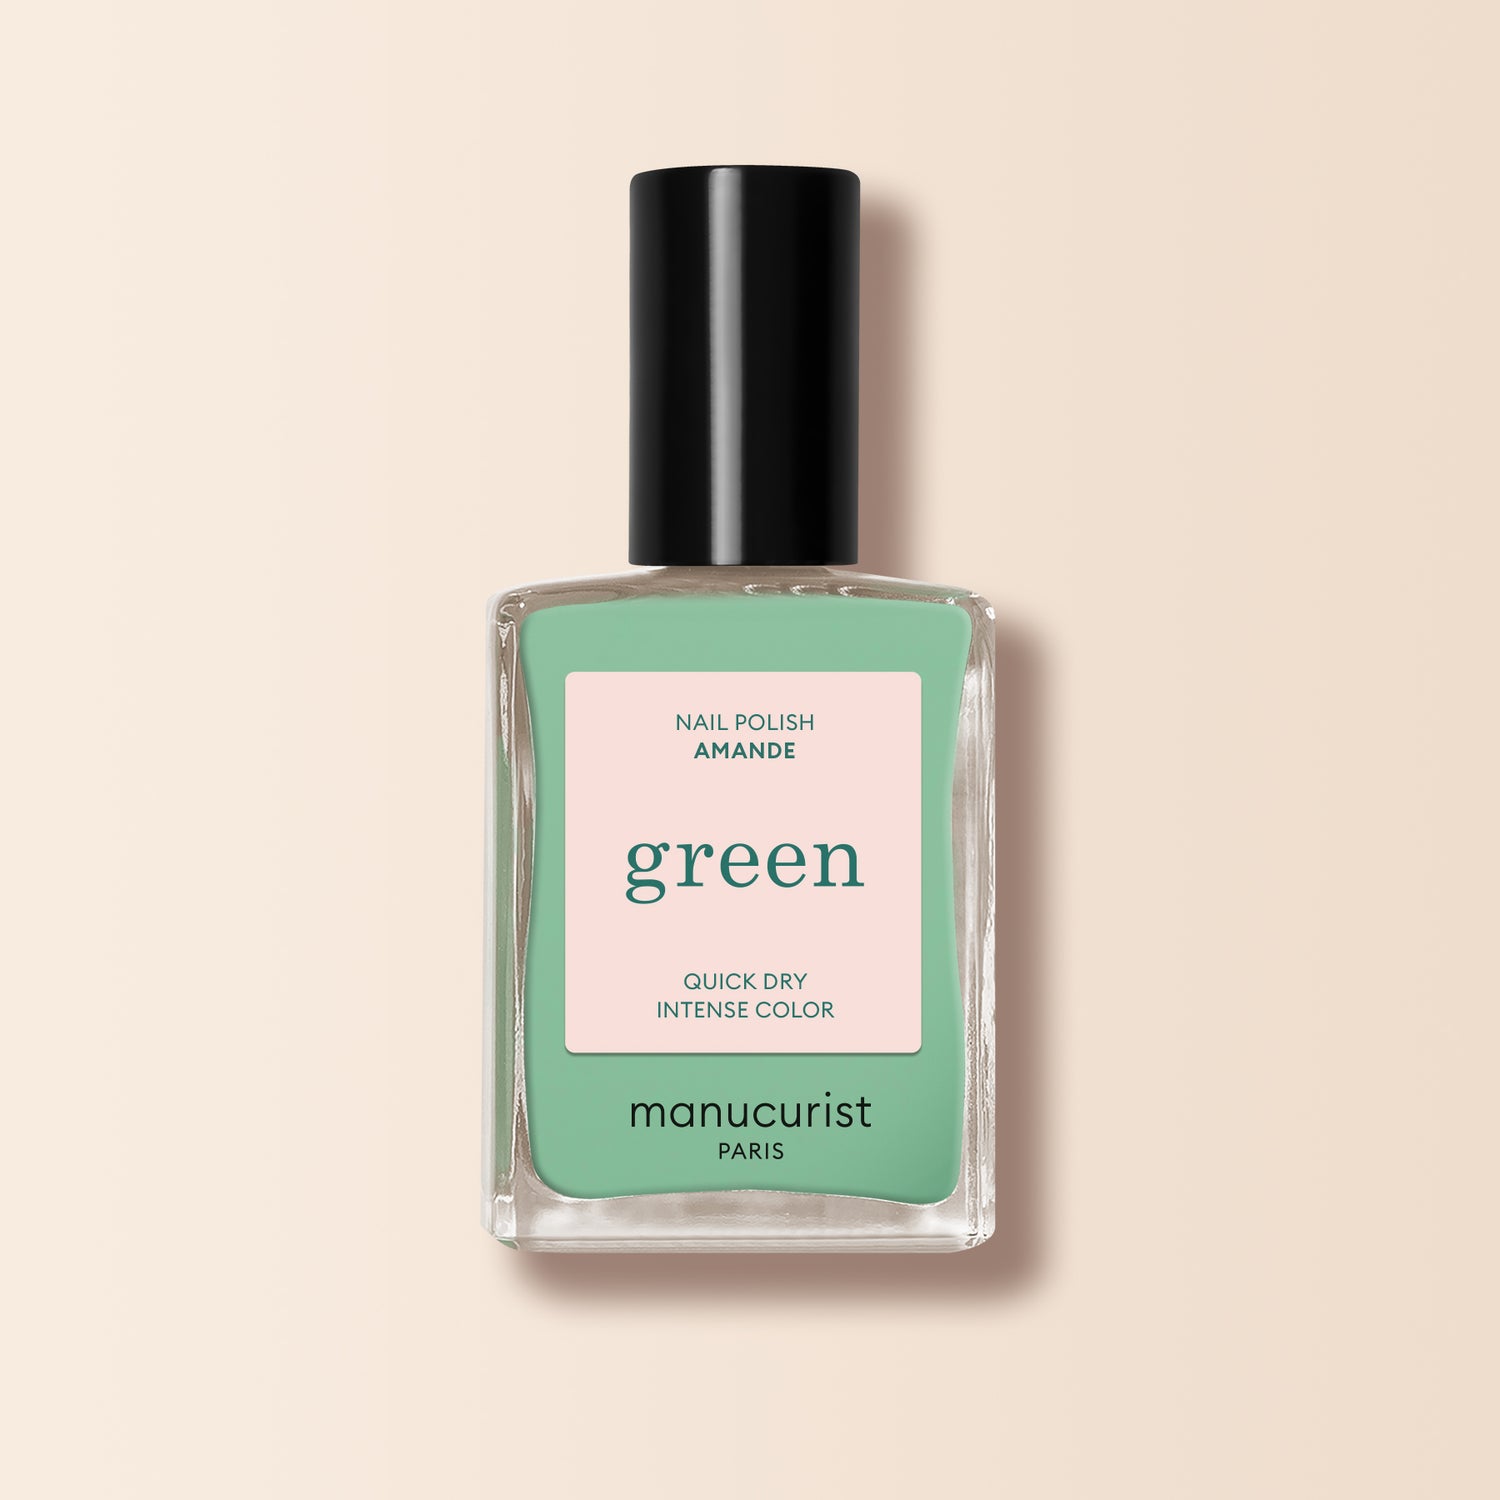 MANUCURIST - Green Nail Polish - Anémone – The Green Jungle Beauty